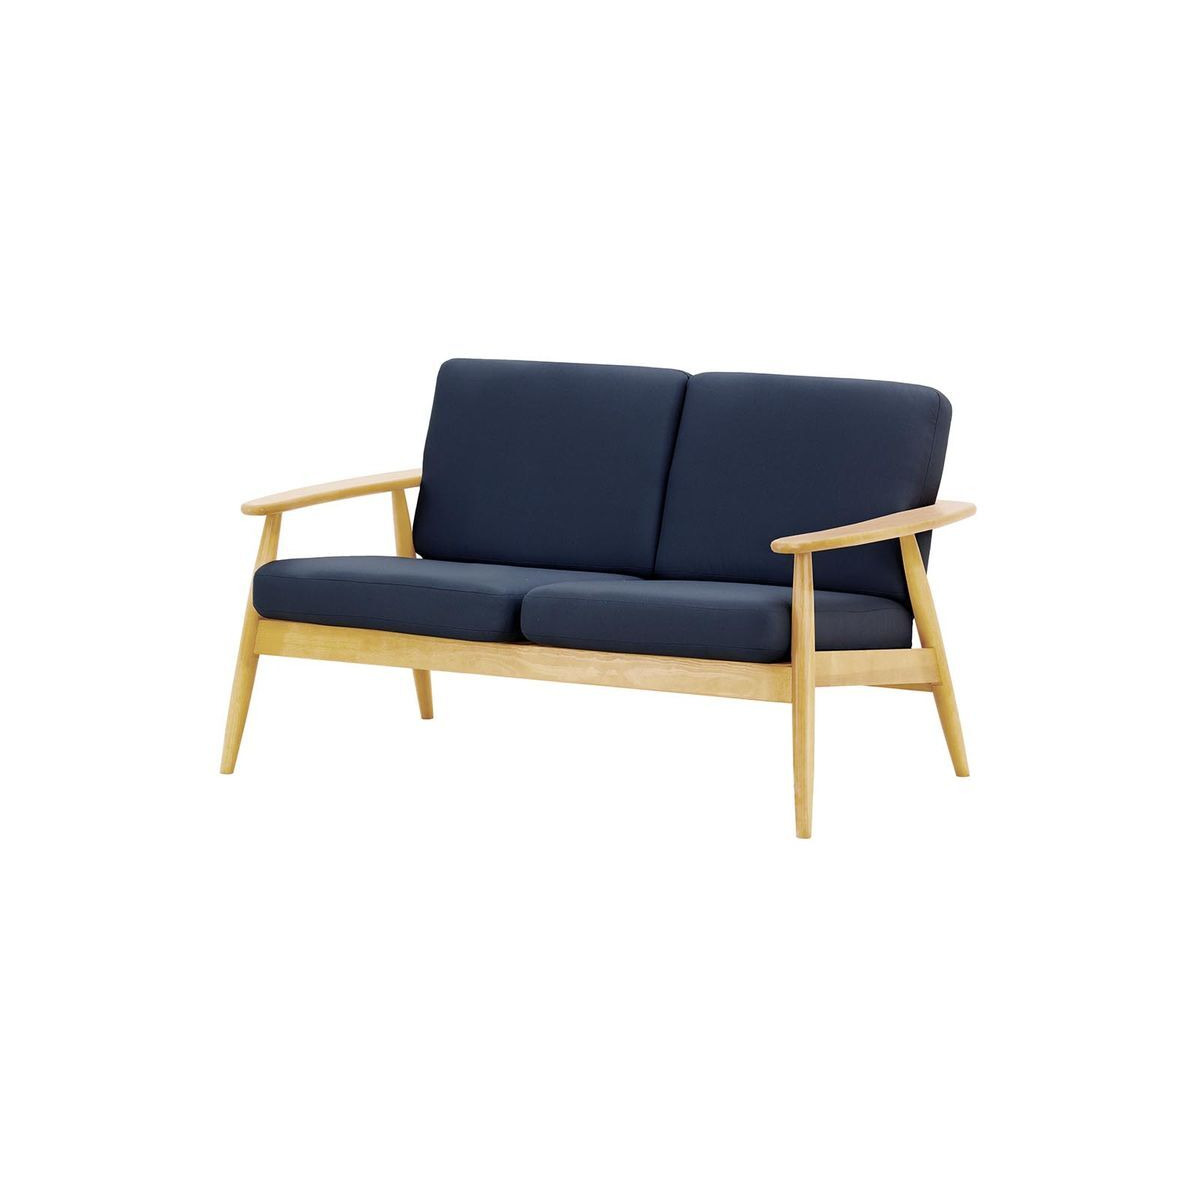 Demure Aqua 2 Seater Garden Sofa, navy blue, Leg colour: 8001 like oak - image 1